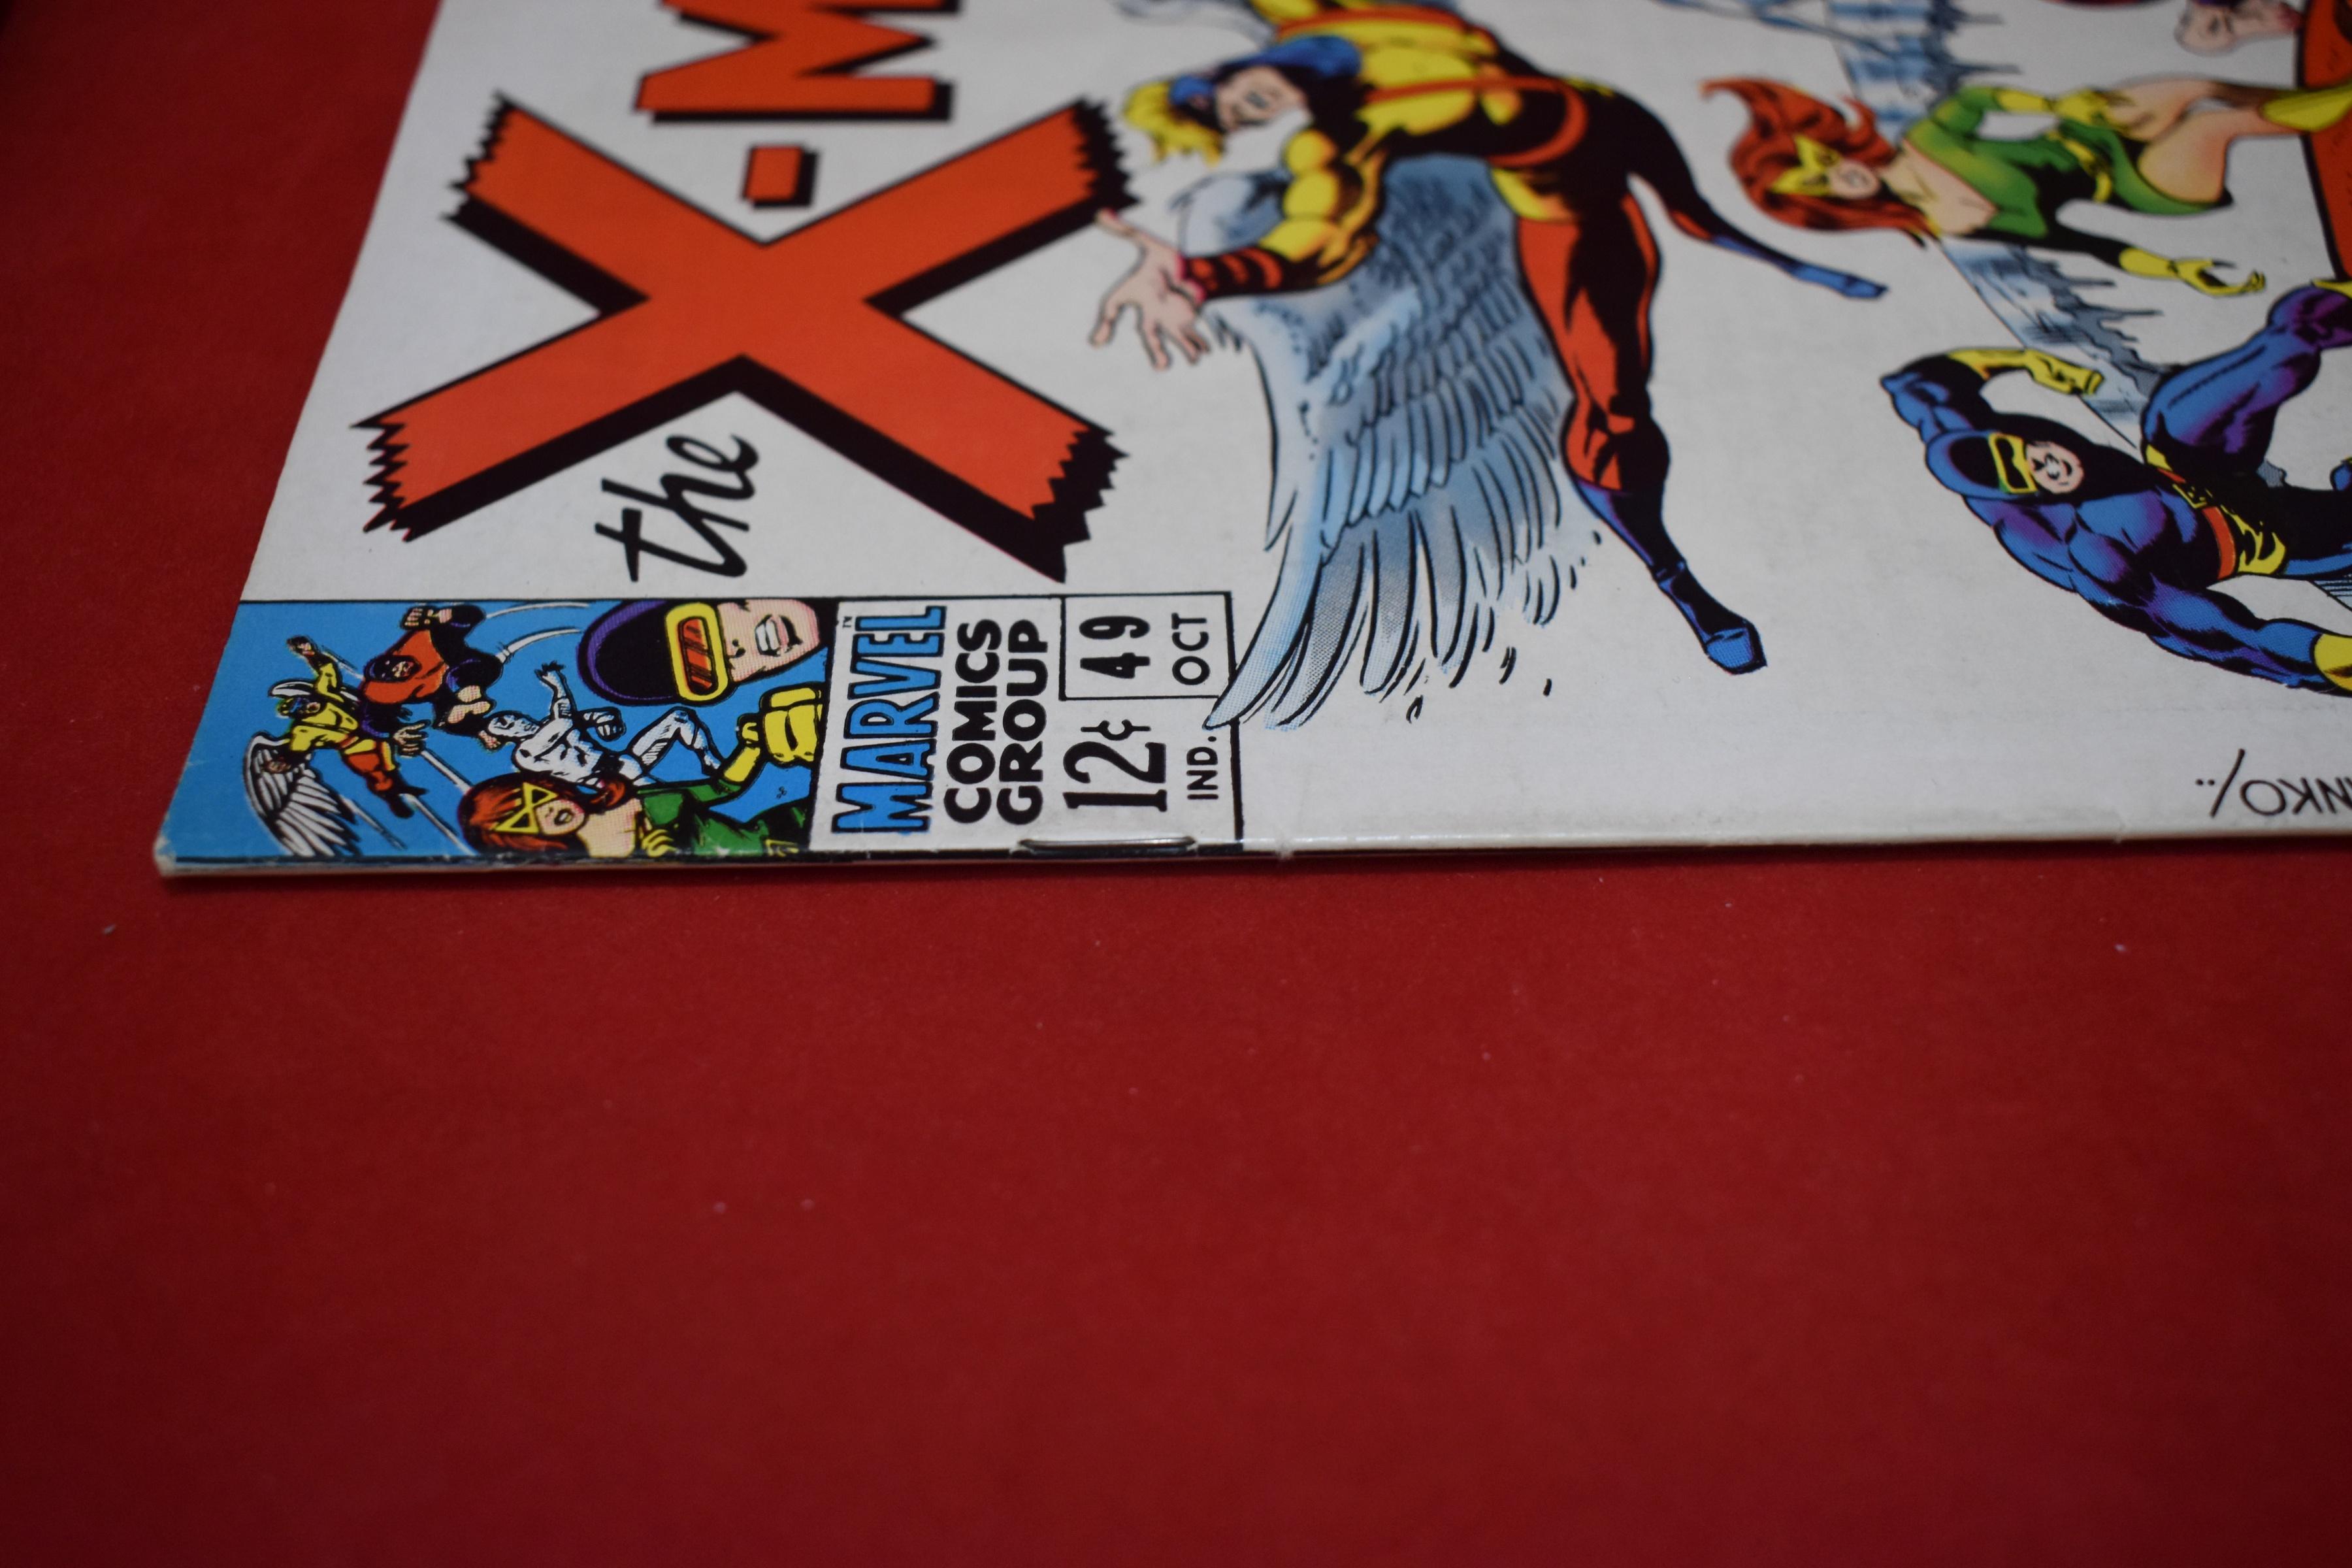 X-MEN #49 | KEY 1ST APP OF LORNA DANE, 1ST APP OF MESMERO, ORIGIN OF BEAST! | NICE BOOK!